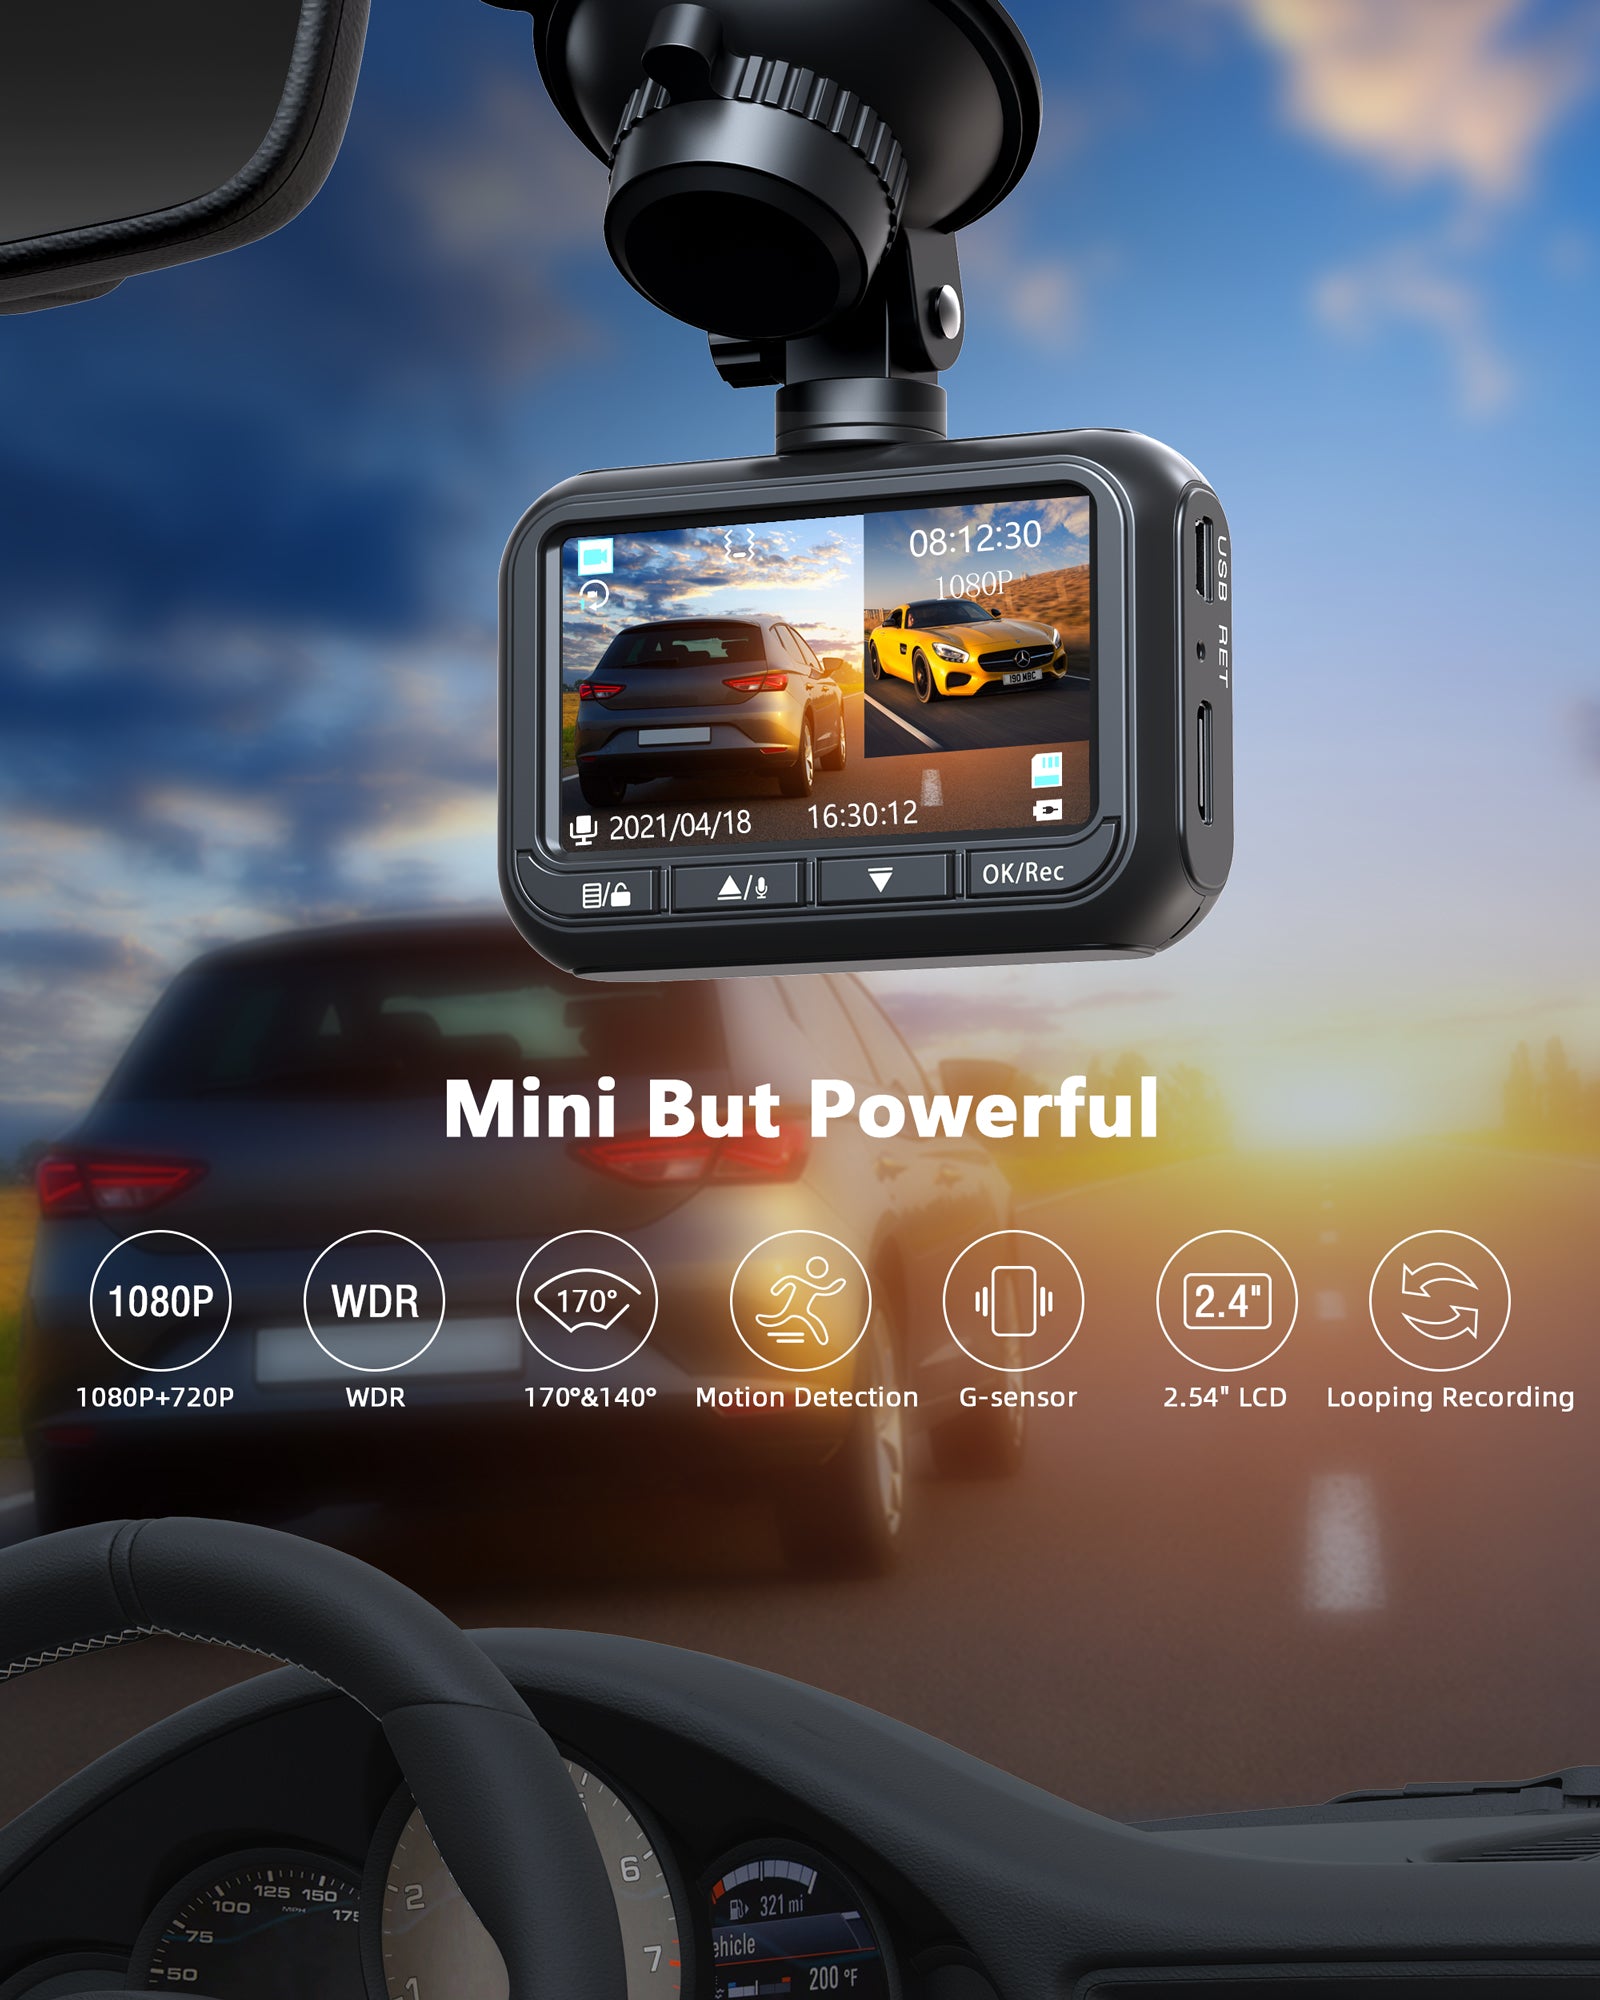 Buy Dash Cam Online, Toguard CE70 Dash Cam